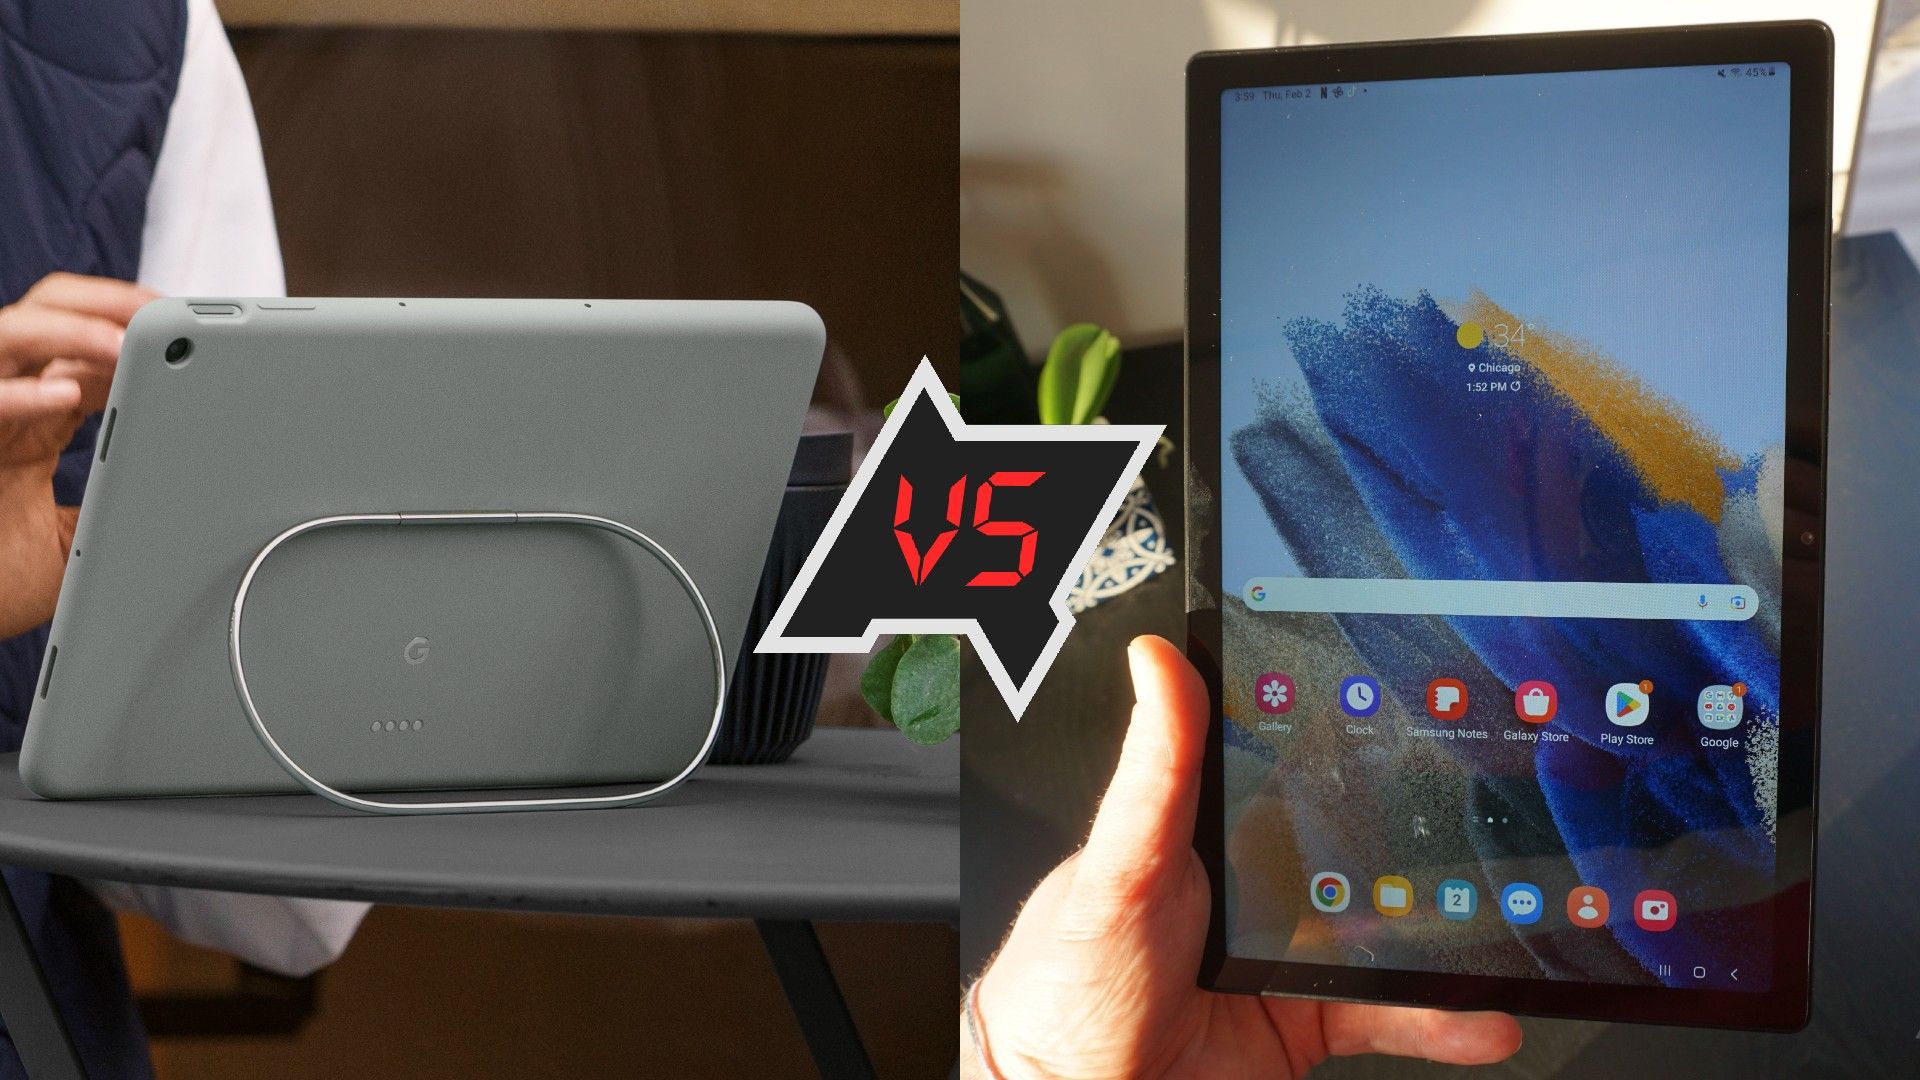 Google Pixel Tablet with Charging Speaker Dock 11 Android Tablet 128GB  Wi-Fi Porcelain GA04750-US - Best Buy